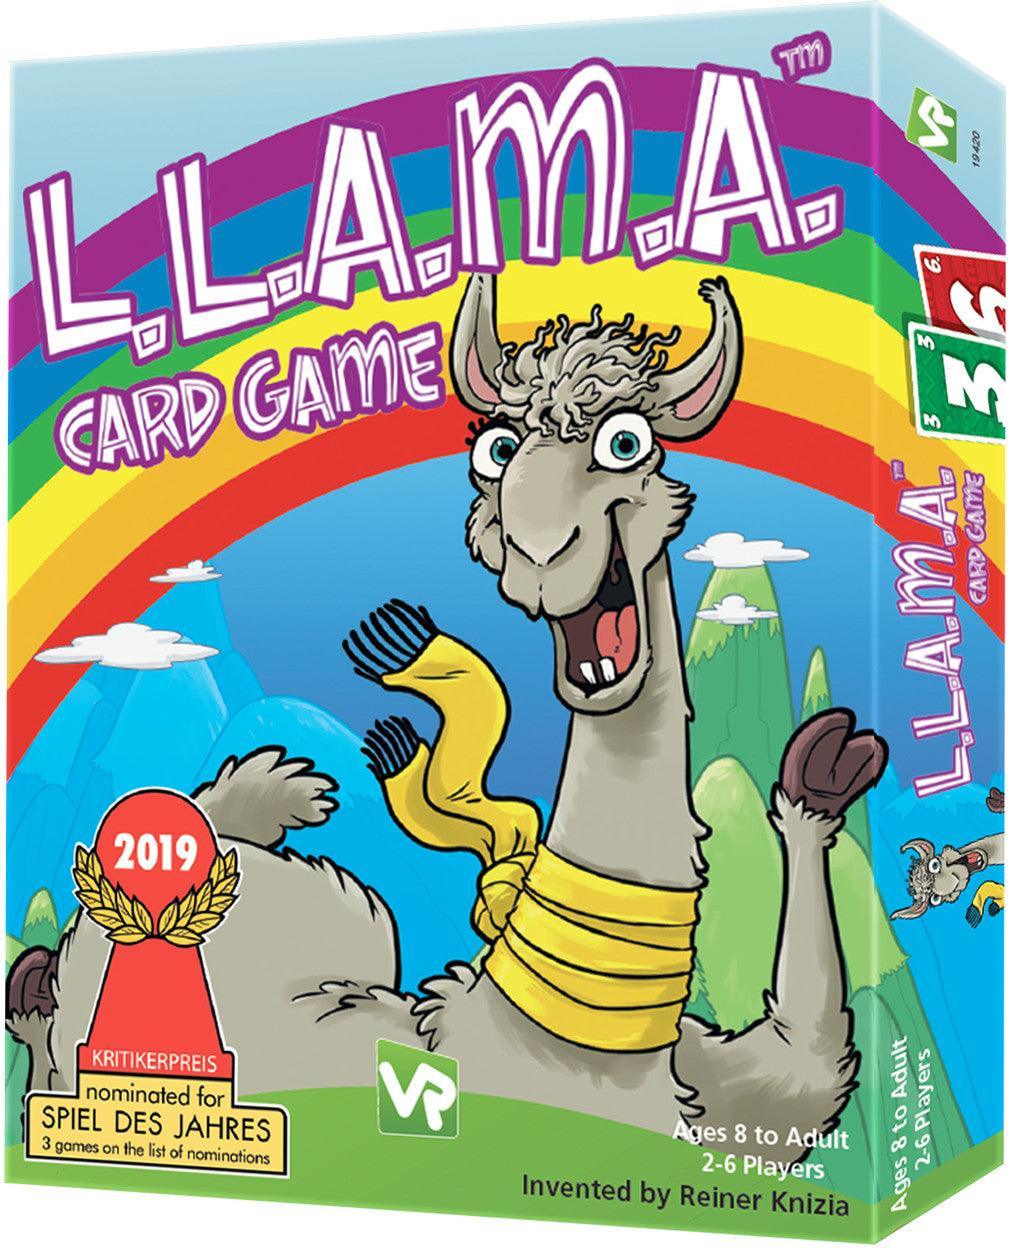 VR-69542 LLAMA Card Game - Amigo - Titan Pop Culture